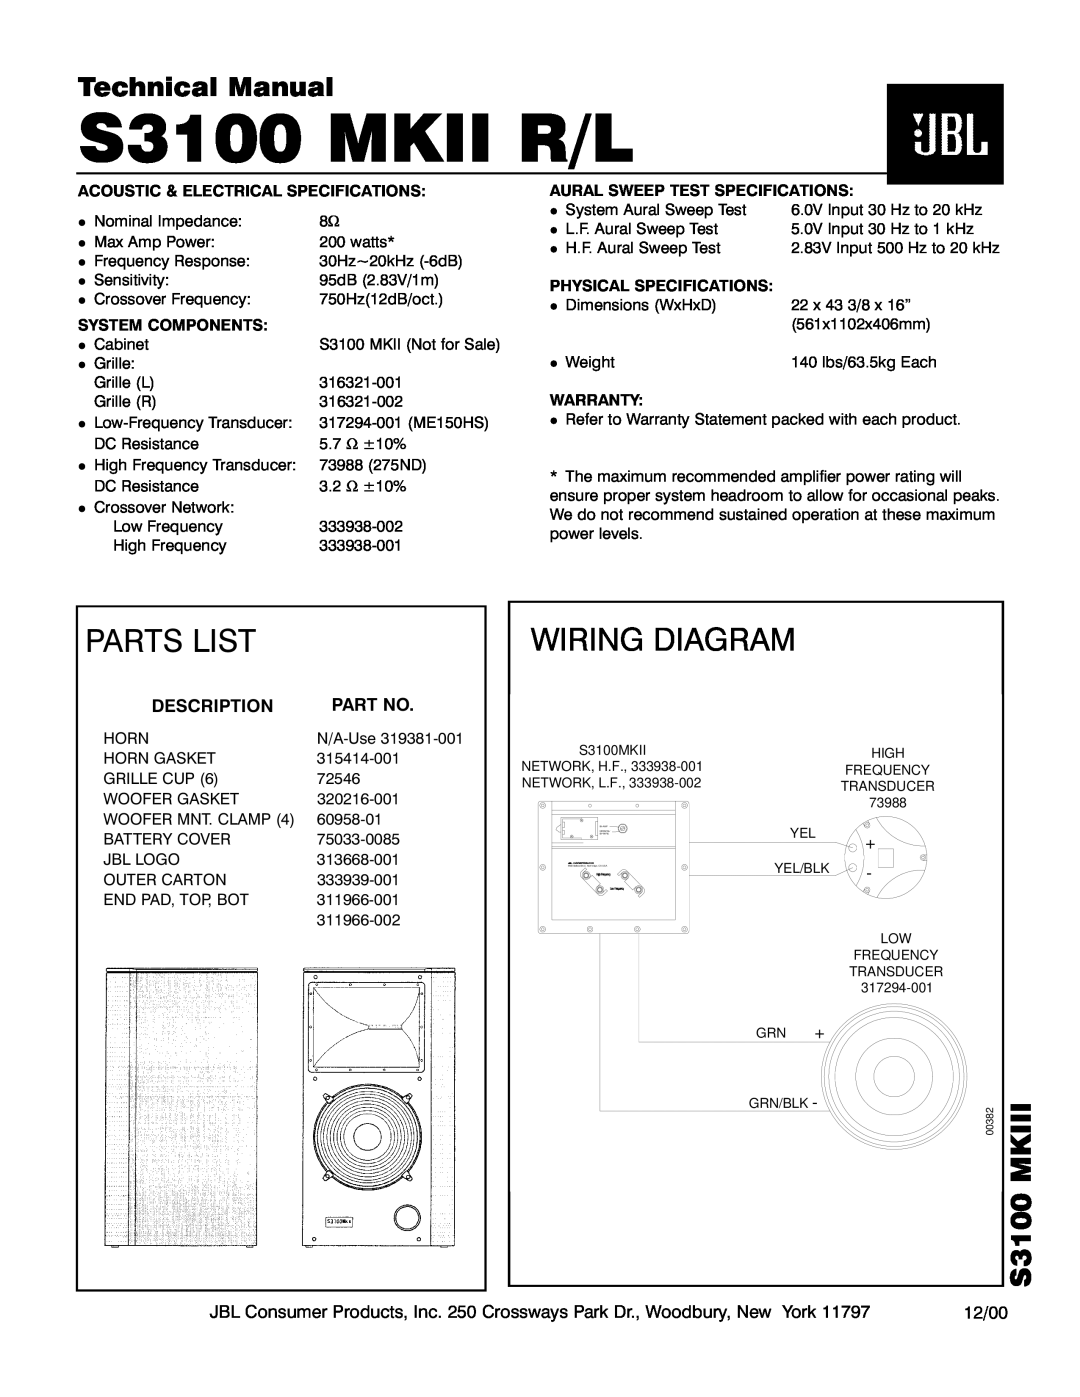 JBL S3100 MKII R/L technical manual Parts List, Wiring Diagram, Mkiii, Technical Manual, Description, 12/00 